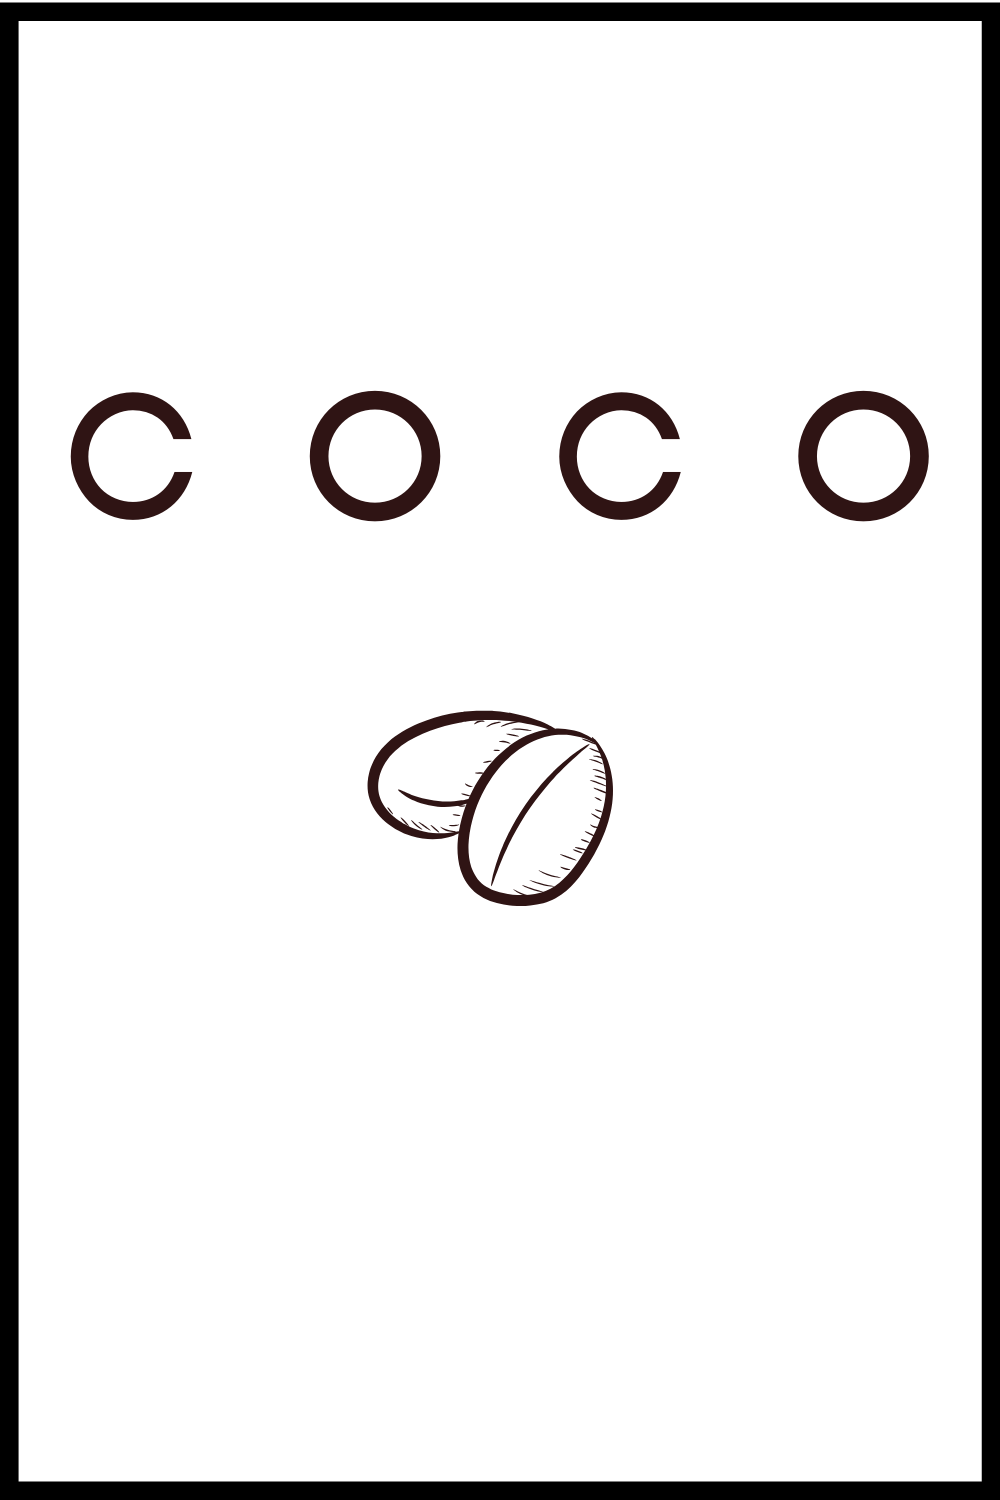 COCO BEANS